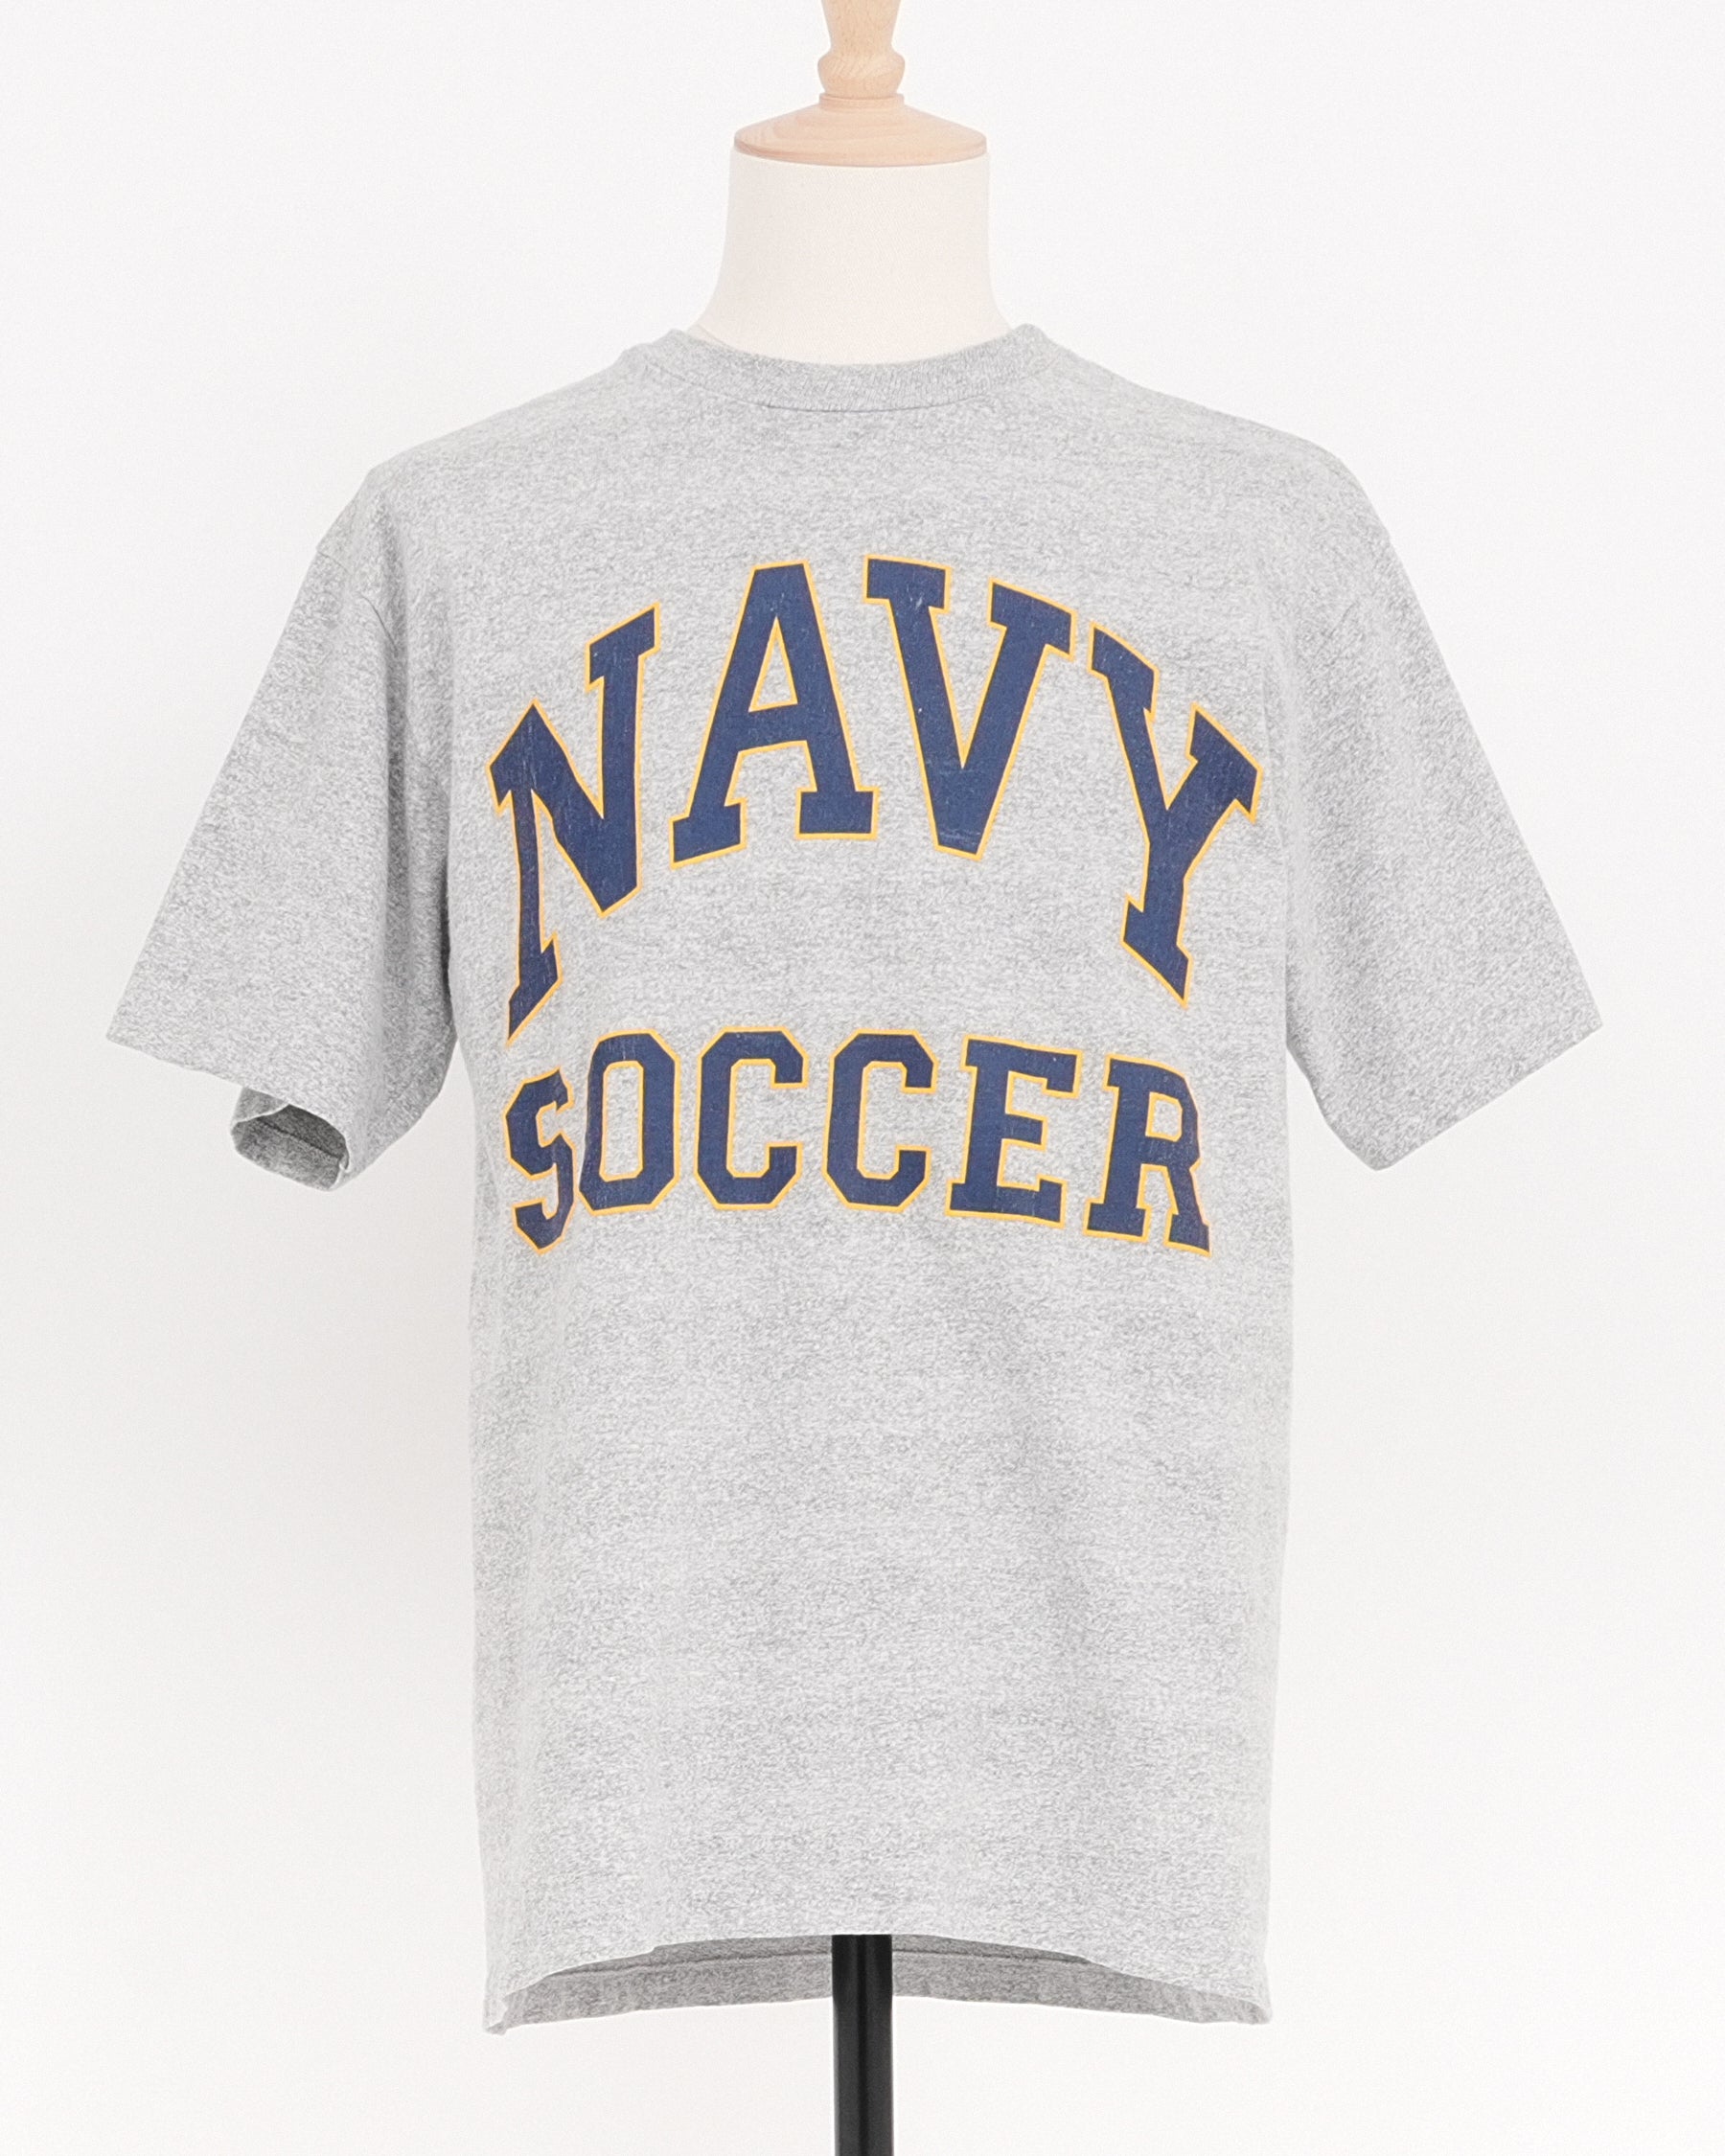 Navy Soccer T-shirt